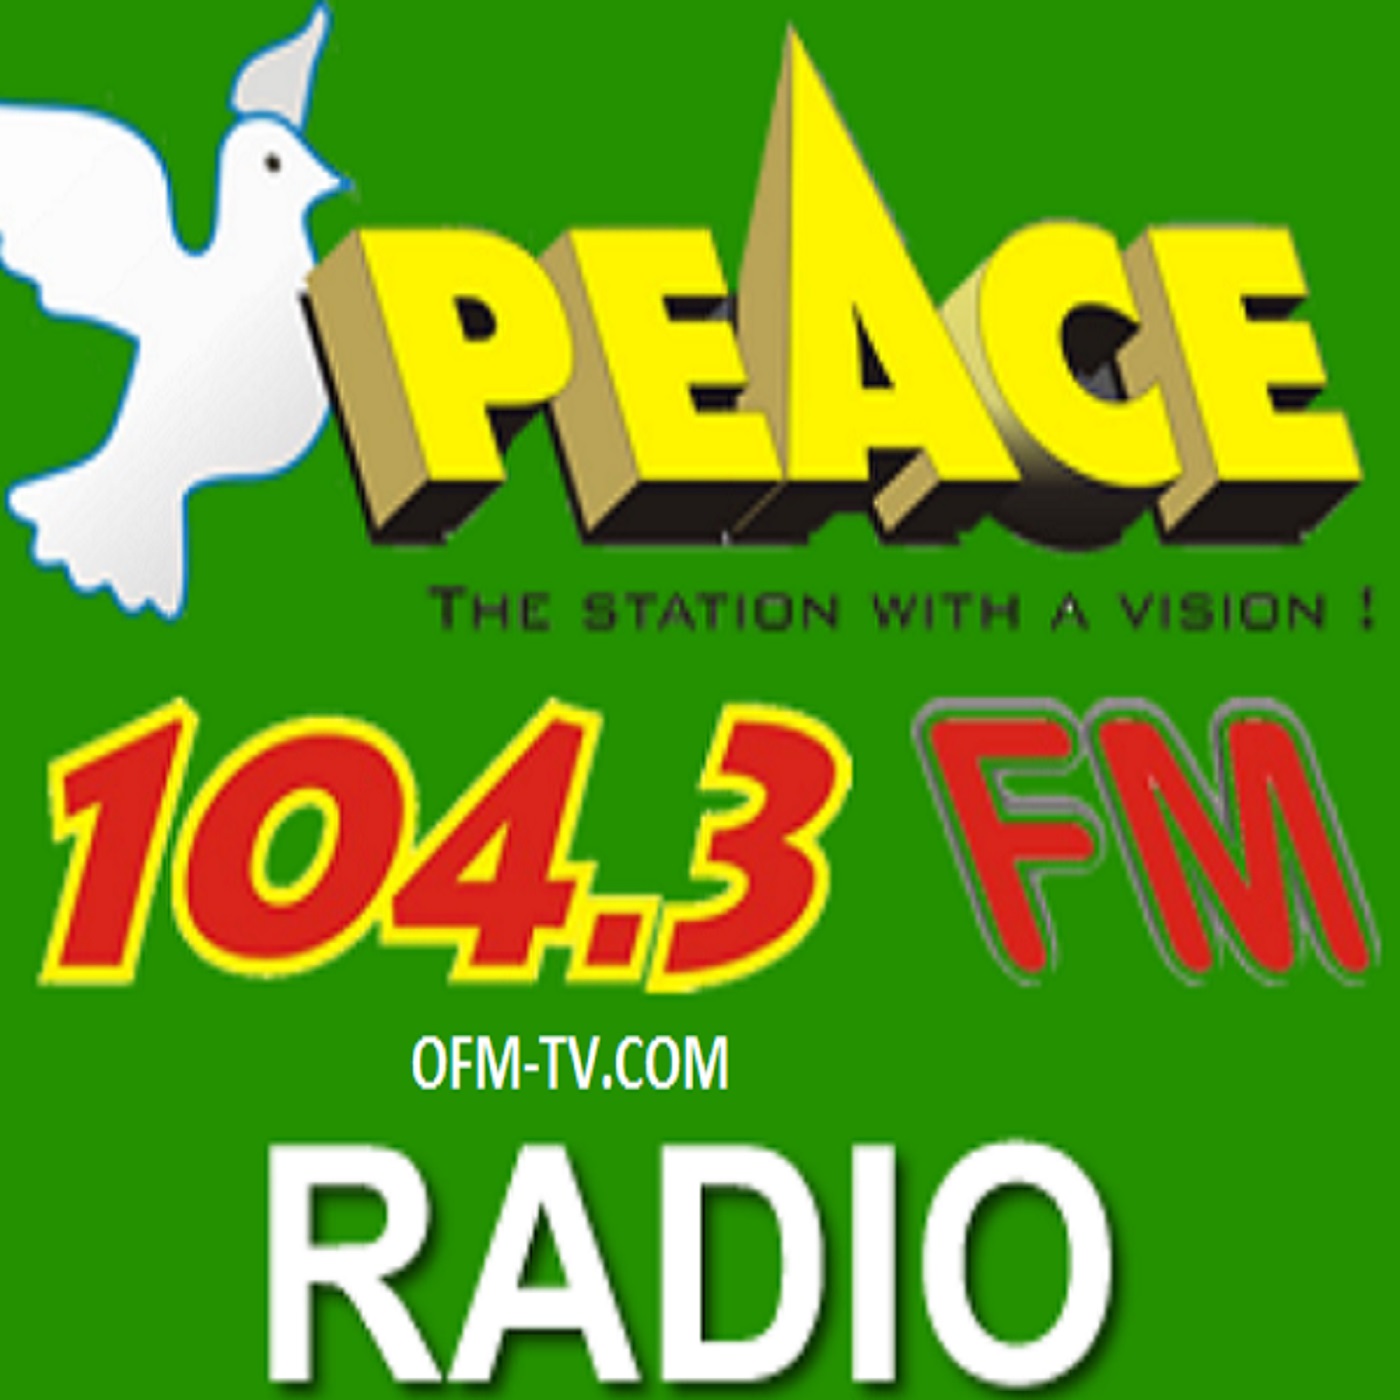 folleto De acuerdo con captura Peace 104.3 FM - Accra, Ghana. - Online Africa Radio Stations Worldwide